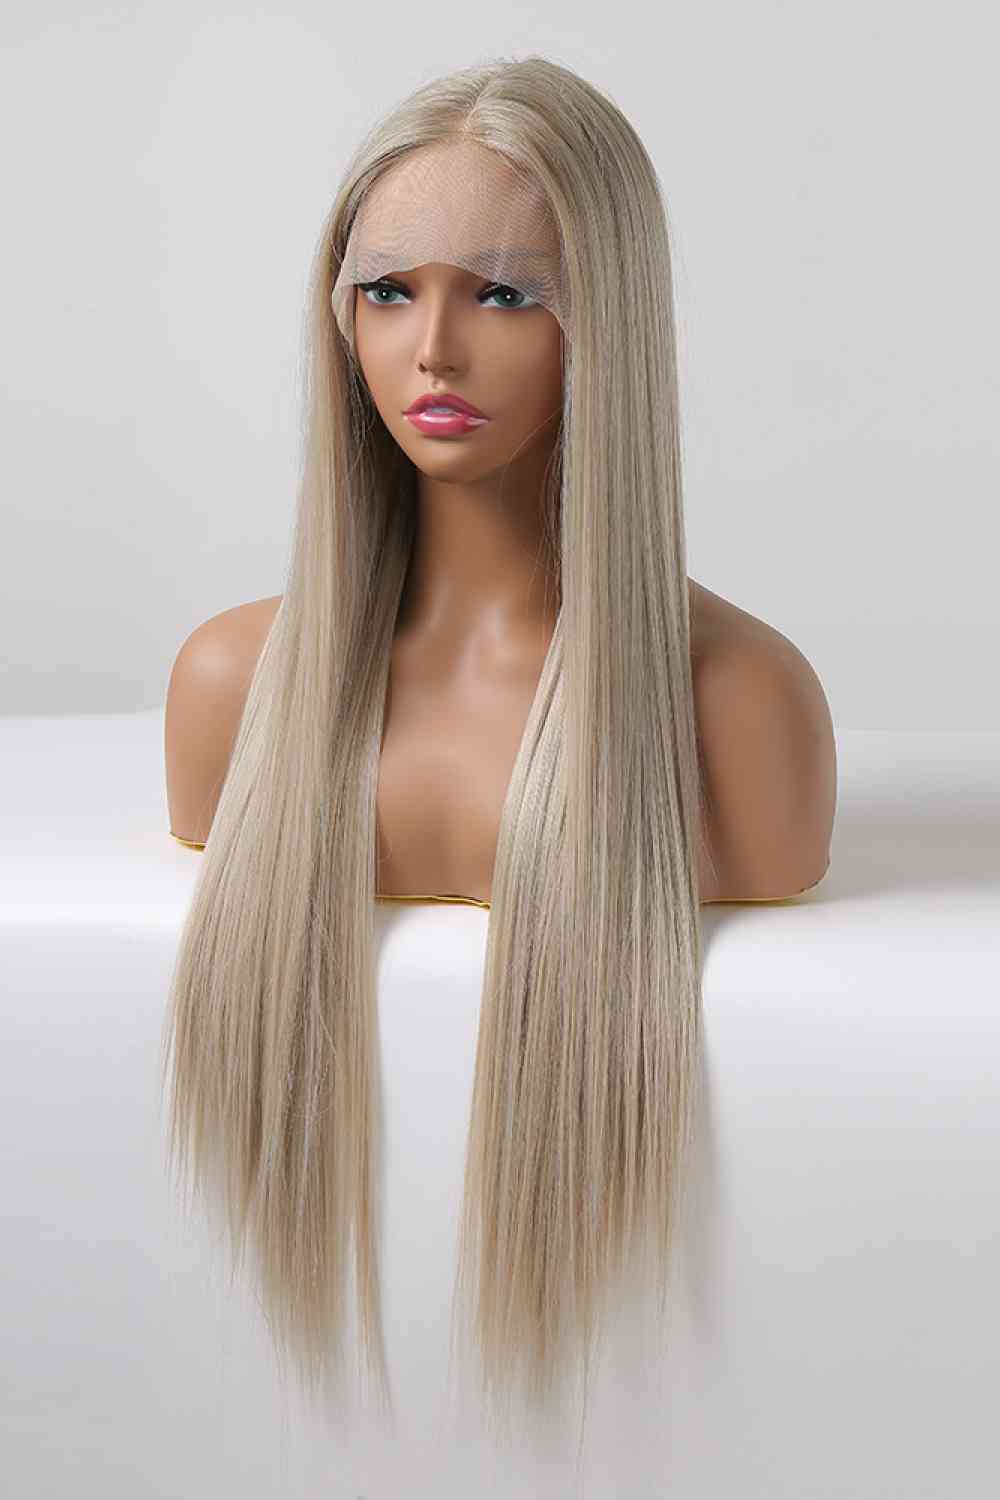 TEEK - Blonde/Ash Brown Root Lace Front Synthetic Straight 27" Wig HAIR TEEK Trend   